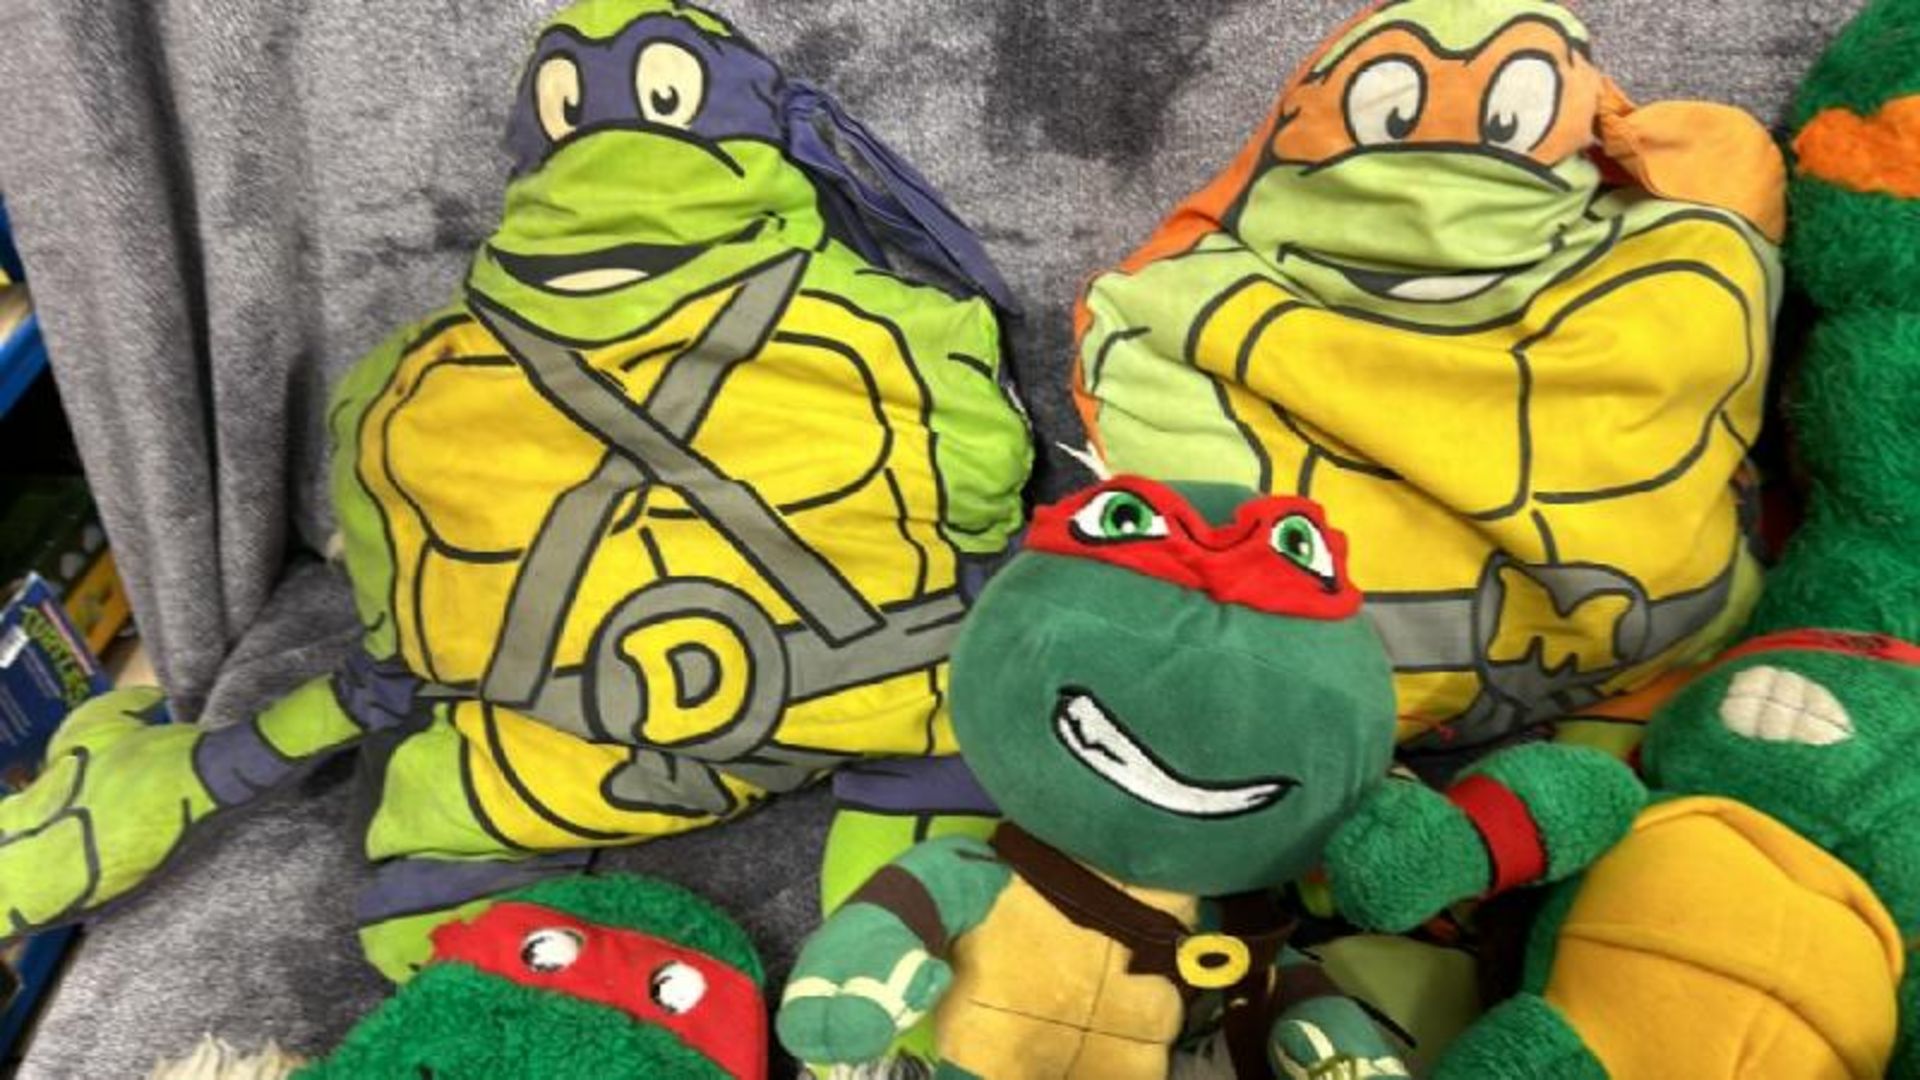 Teenage Mutant Hero Turtles soft toys, rug, rucksacks, bags and hot water bottles / AN41 - Image 2 of 8